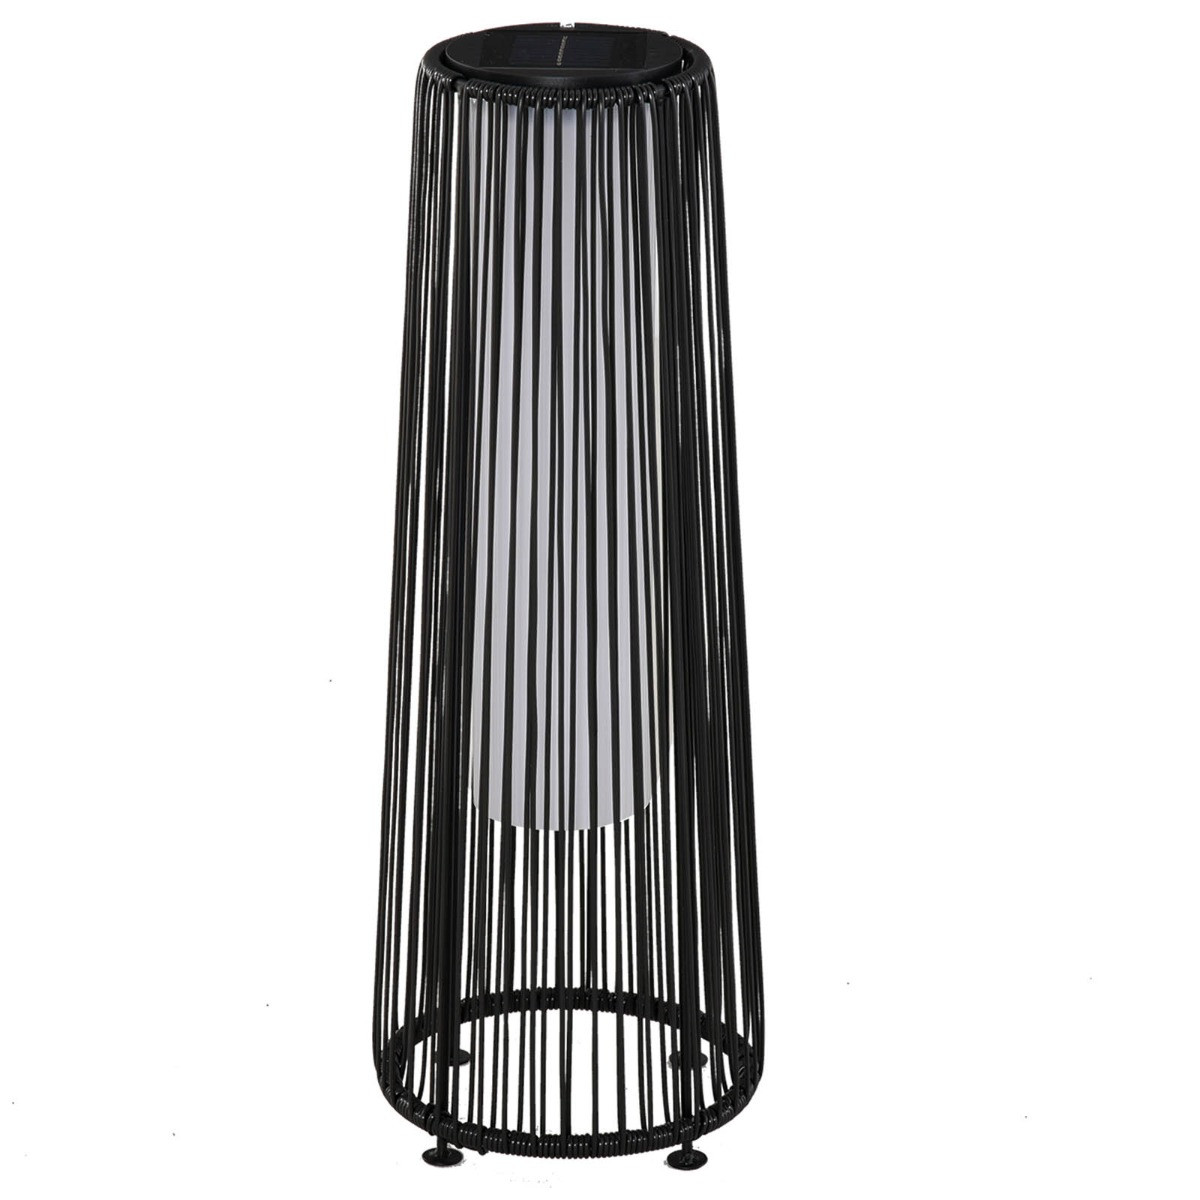 Outsunny Woven Resin Wicker Outdoor Solar Lantern Light - Black>